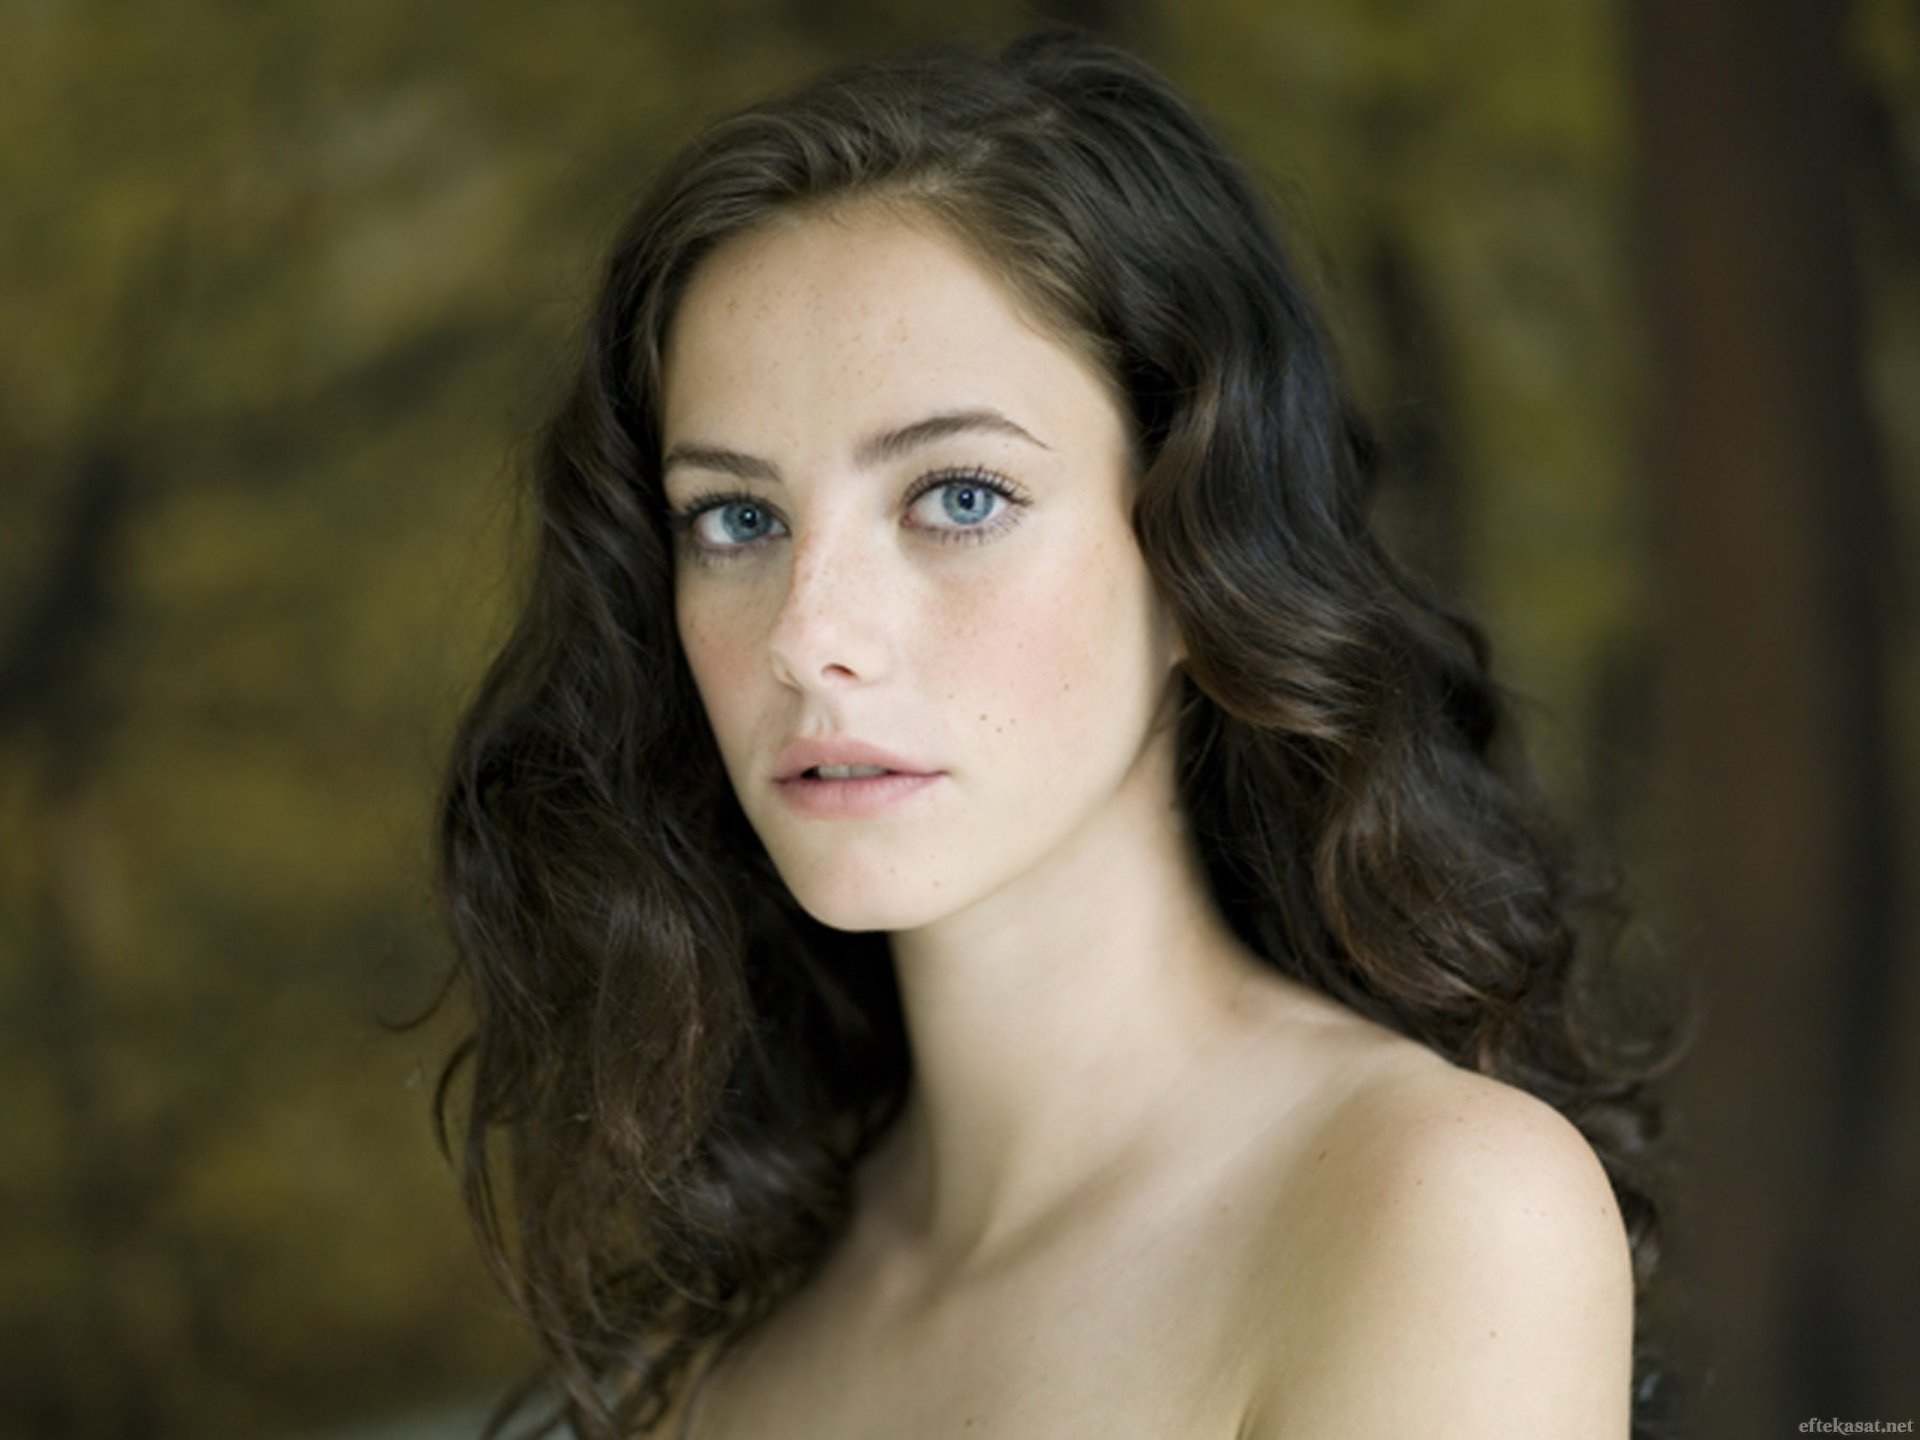 Short-haired brunette model with blue eyes - wide 7